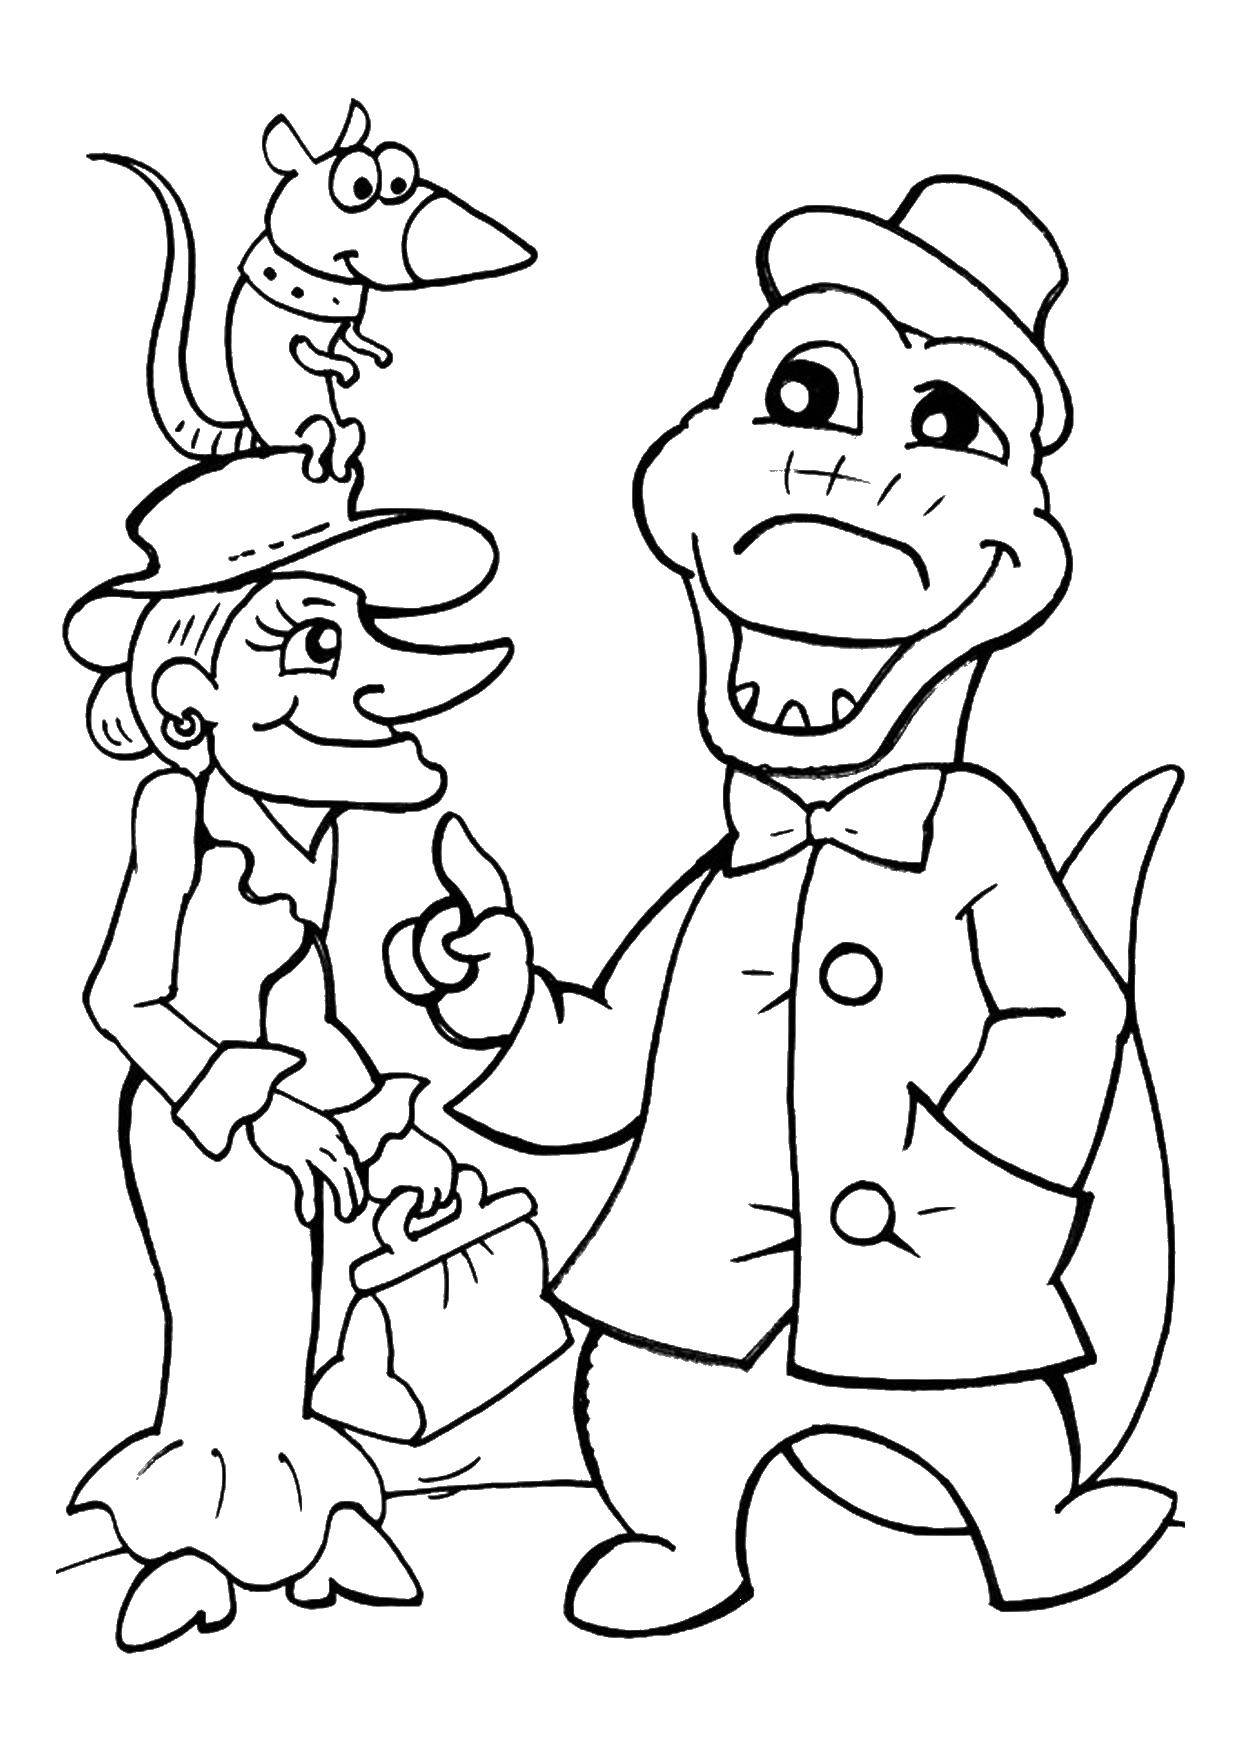 Coloring Crocodile Gena and Shapoklyak. Category cartoons. Tags:  Shrek, cartoons, Gibus.